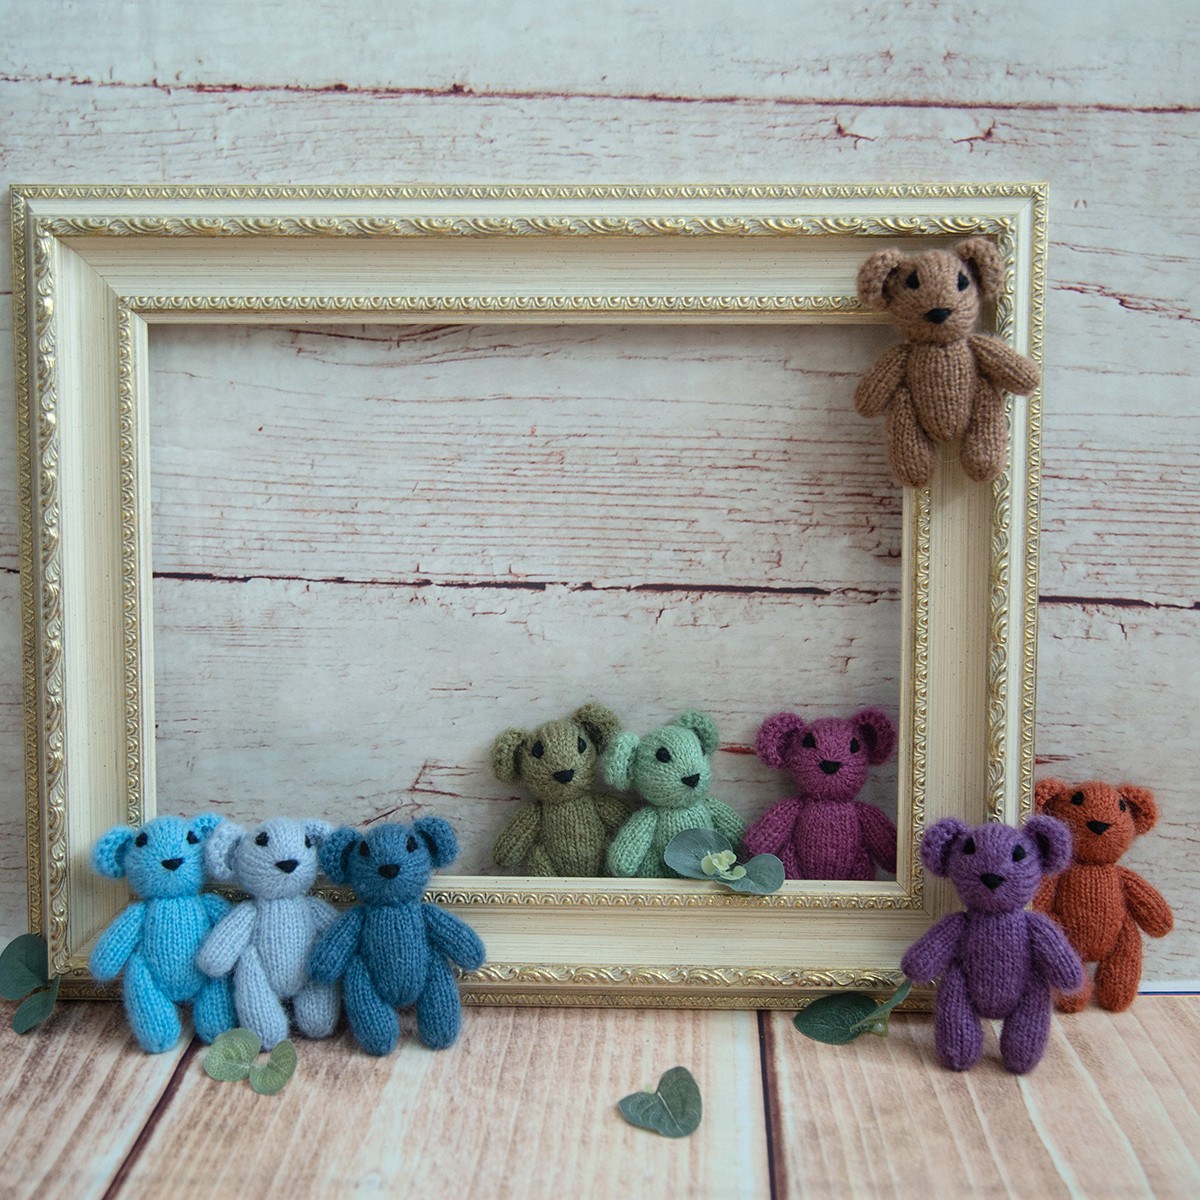 Newborn Teddy Bear Knit Mohair Animal Stuffer Photography Props Crochet Baby Photo Shoot